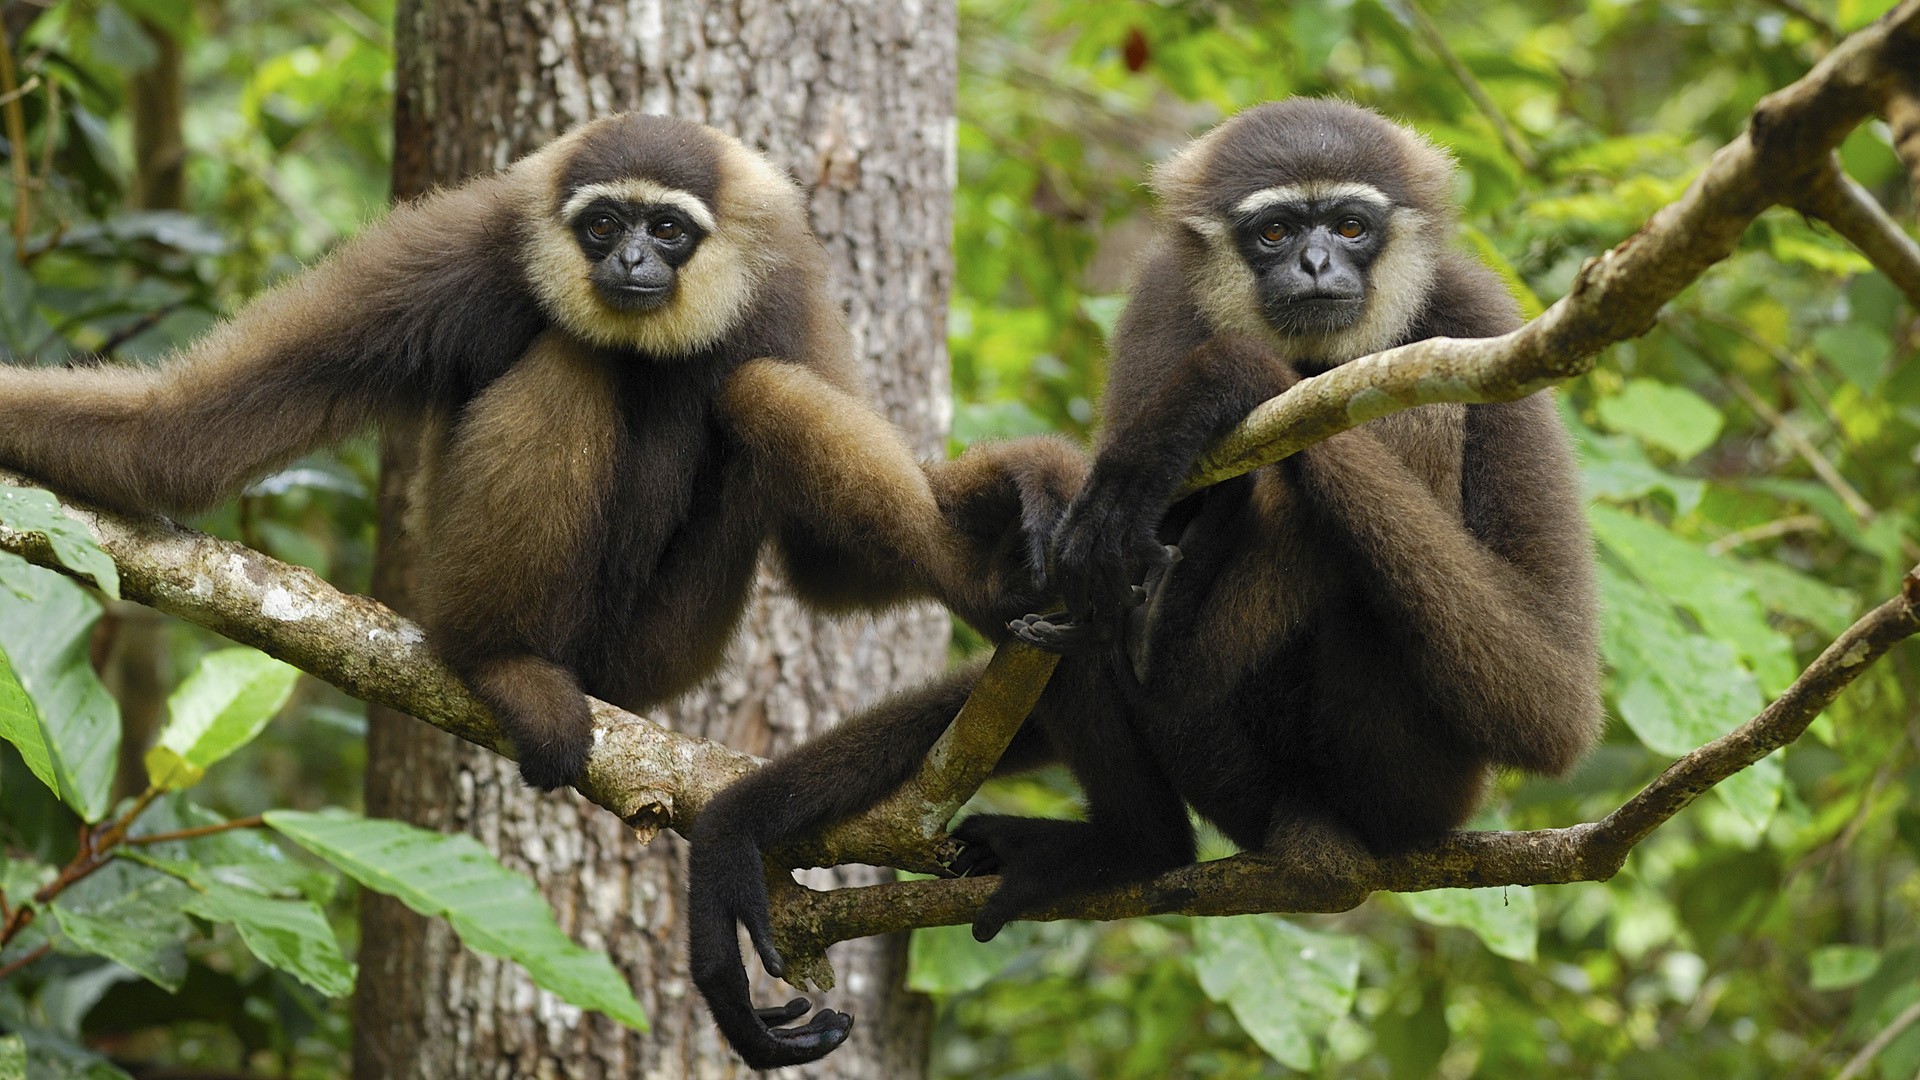 chimpanzee monkey-wallpaper-for-macbook | Download Free Desktop ...